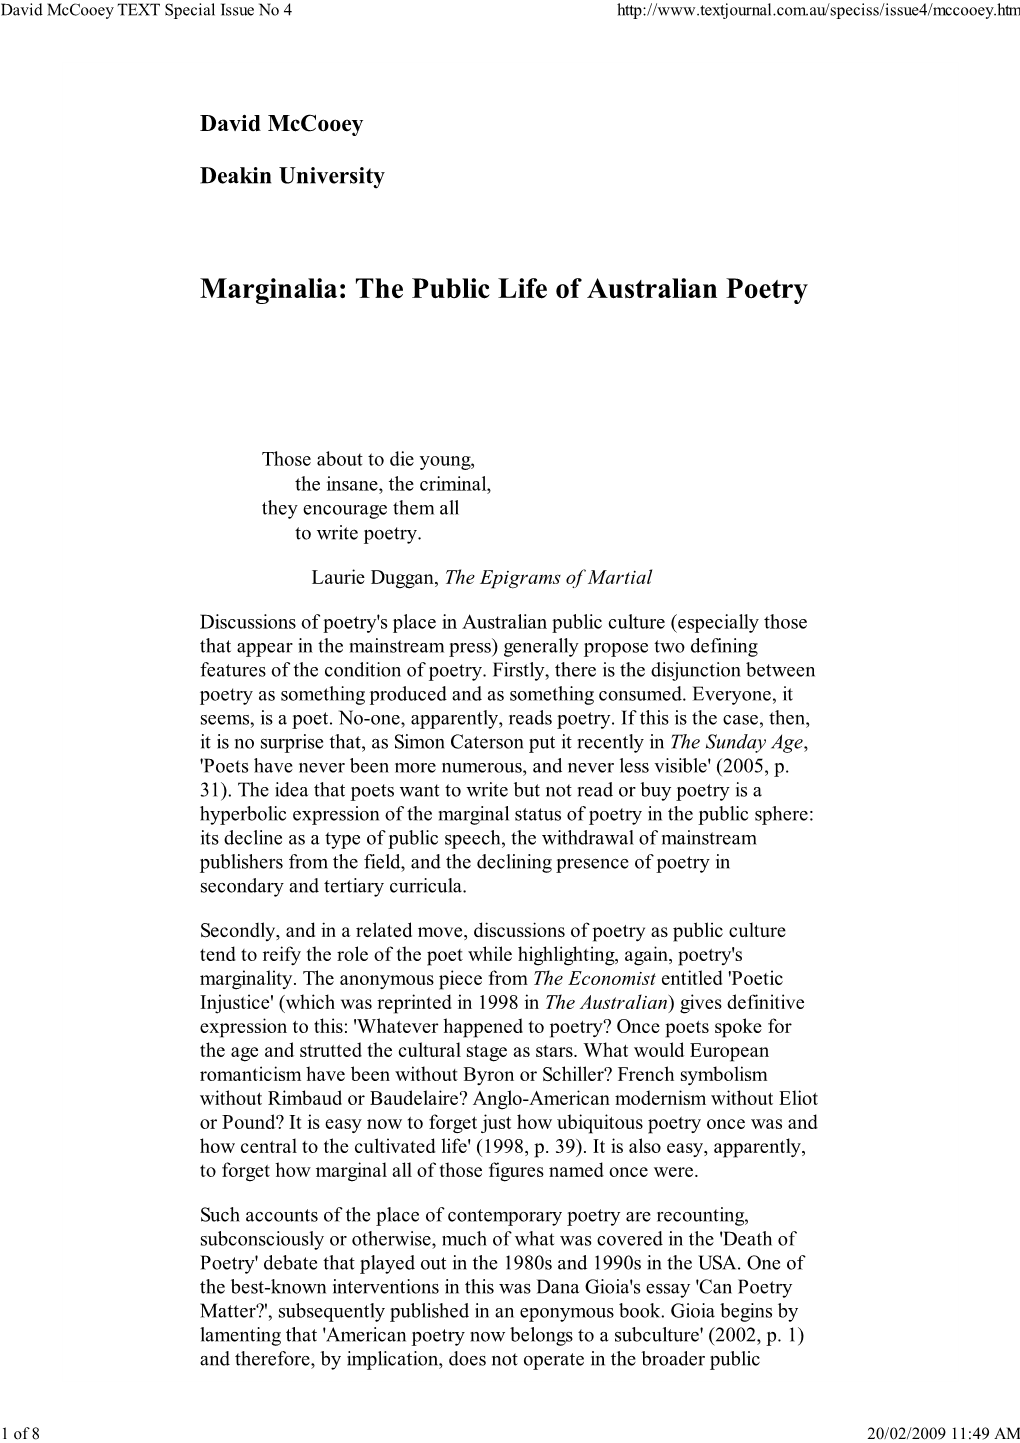 Marginalia: the Public Life of Australian Poetry